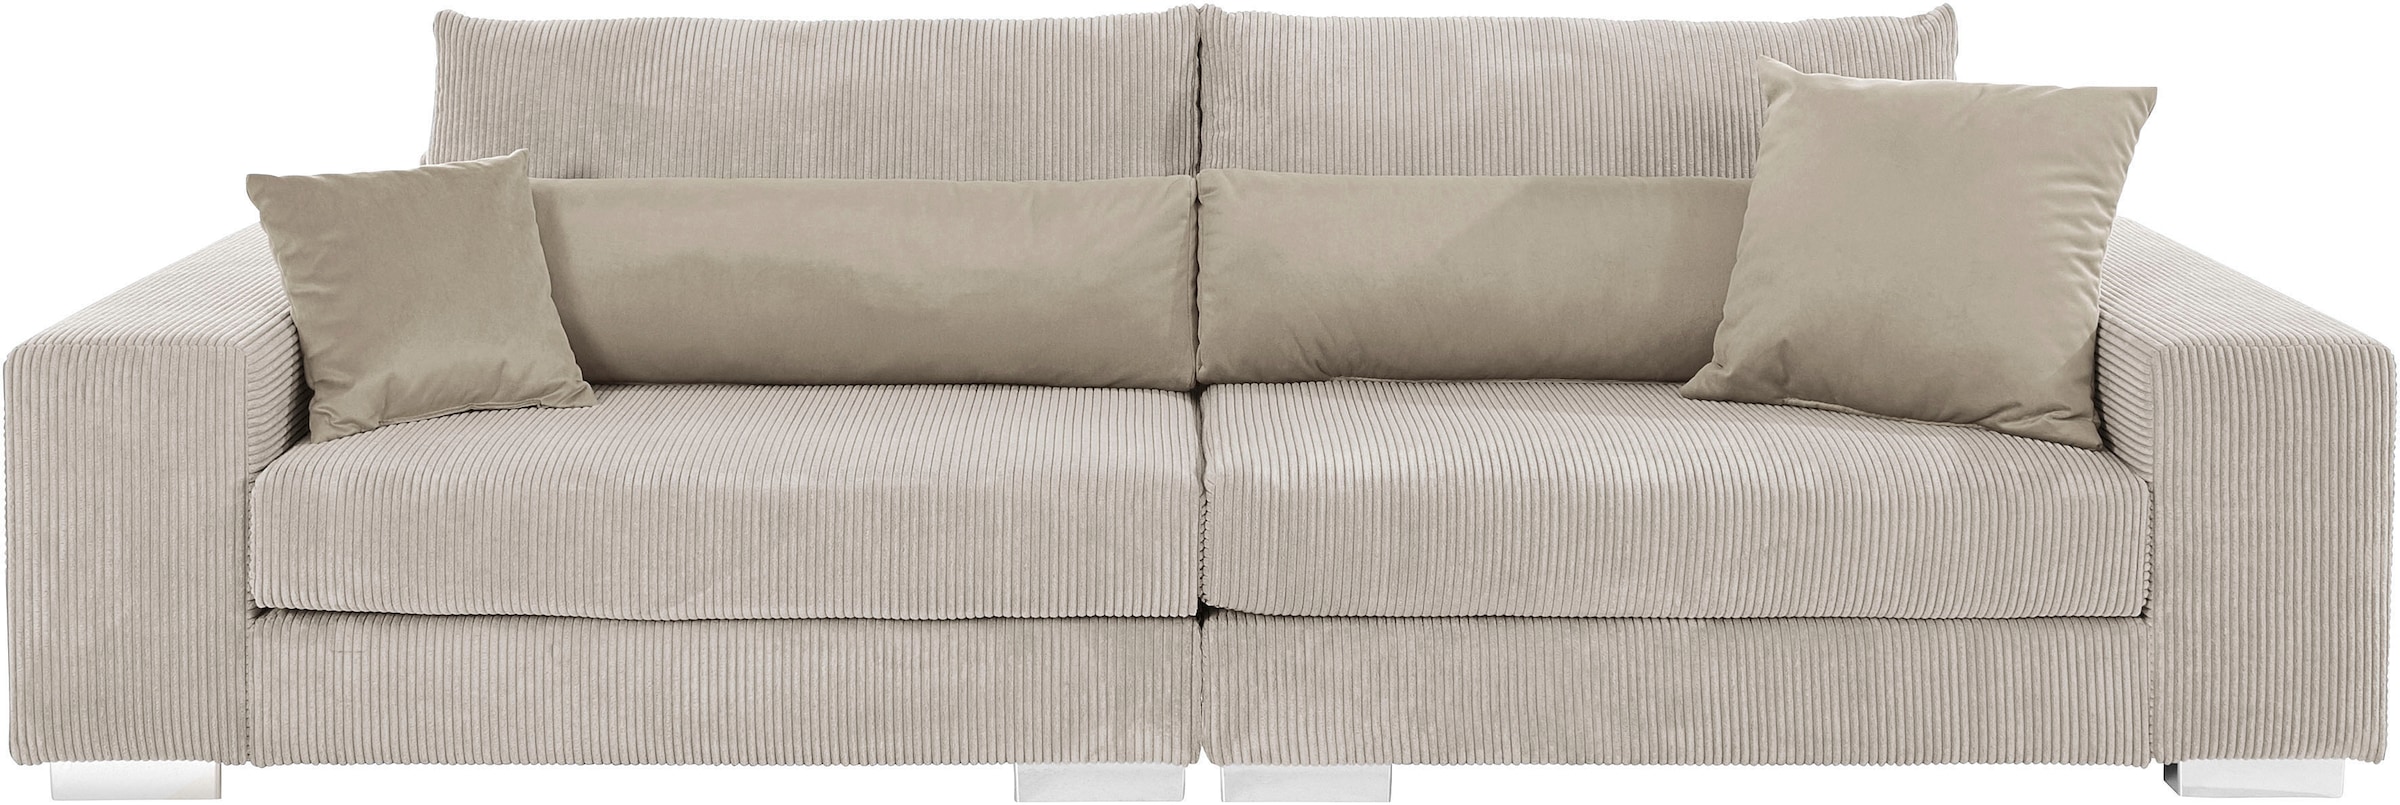 Home affaire Big-Sofa »Vasco«, Breite 277 cm, inkl. 6-teiliges Kissenset,  in Cord bestellen bei OTTO | Big Sofas